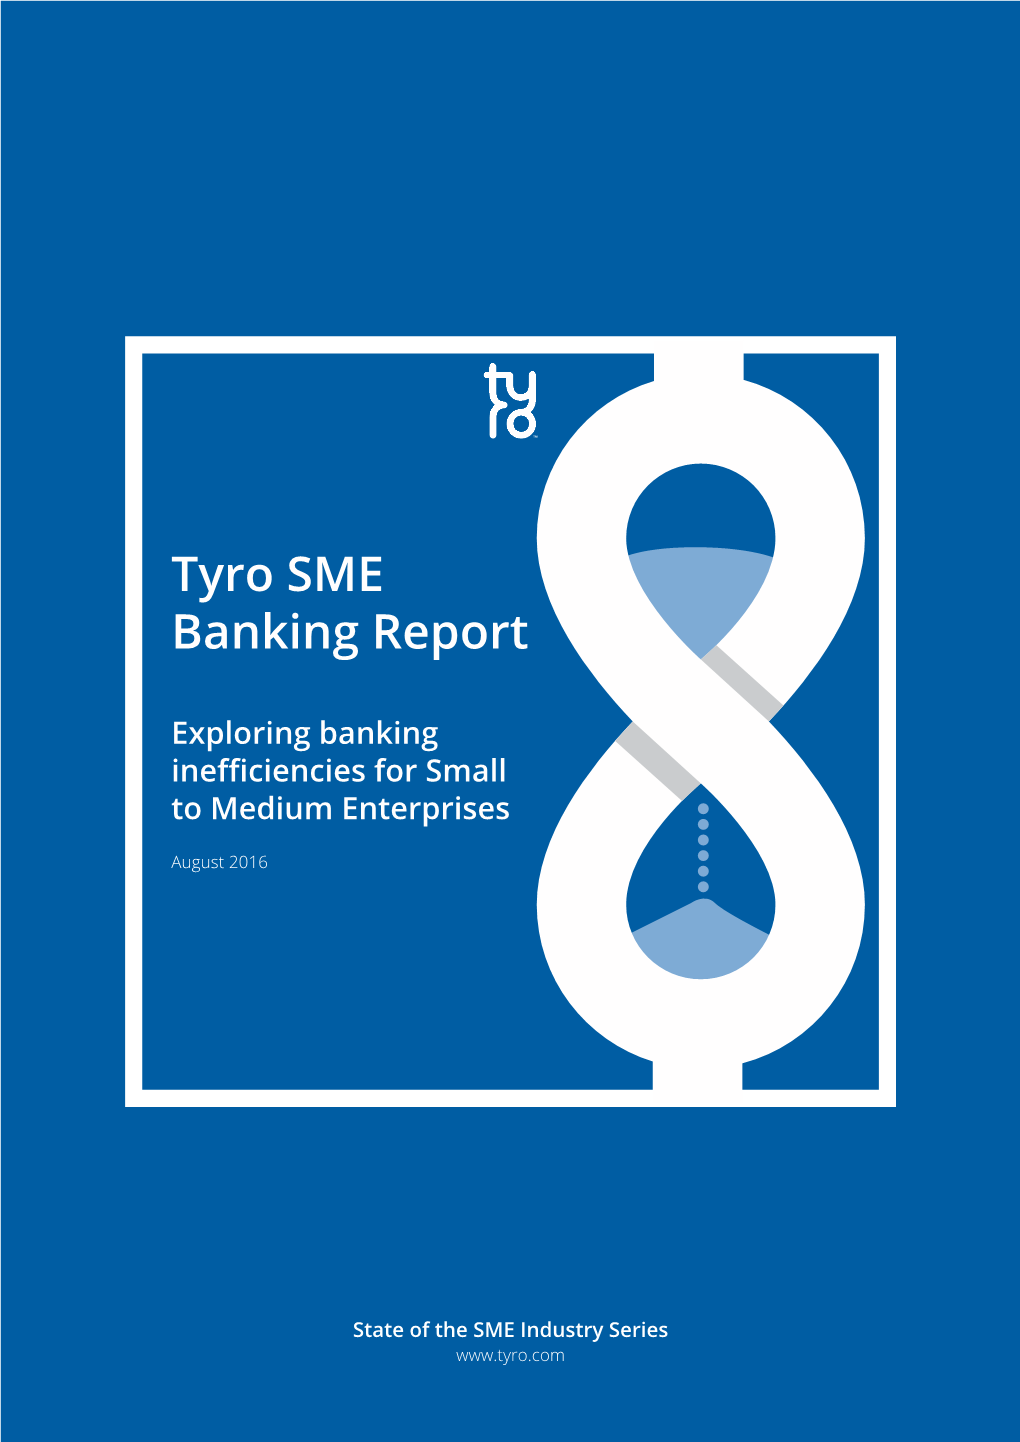 Tyro SME Banking Report